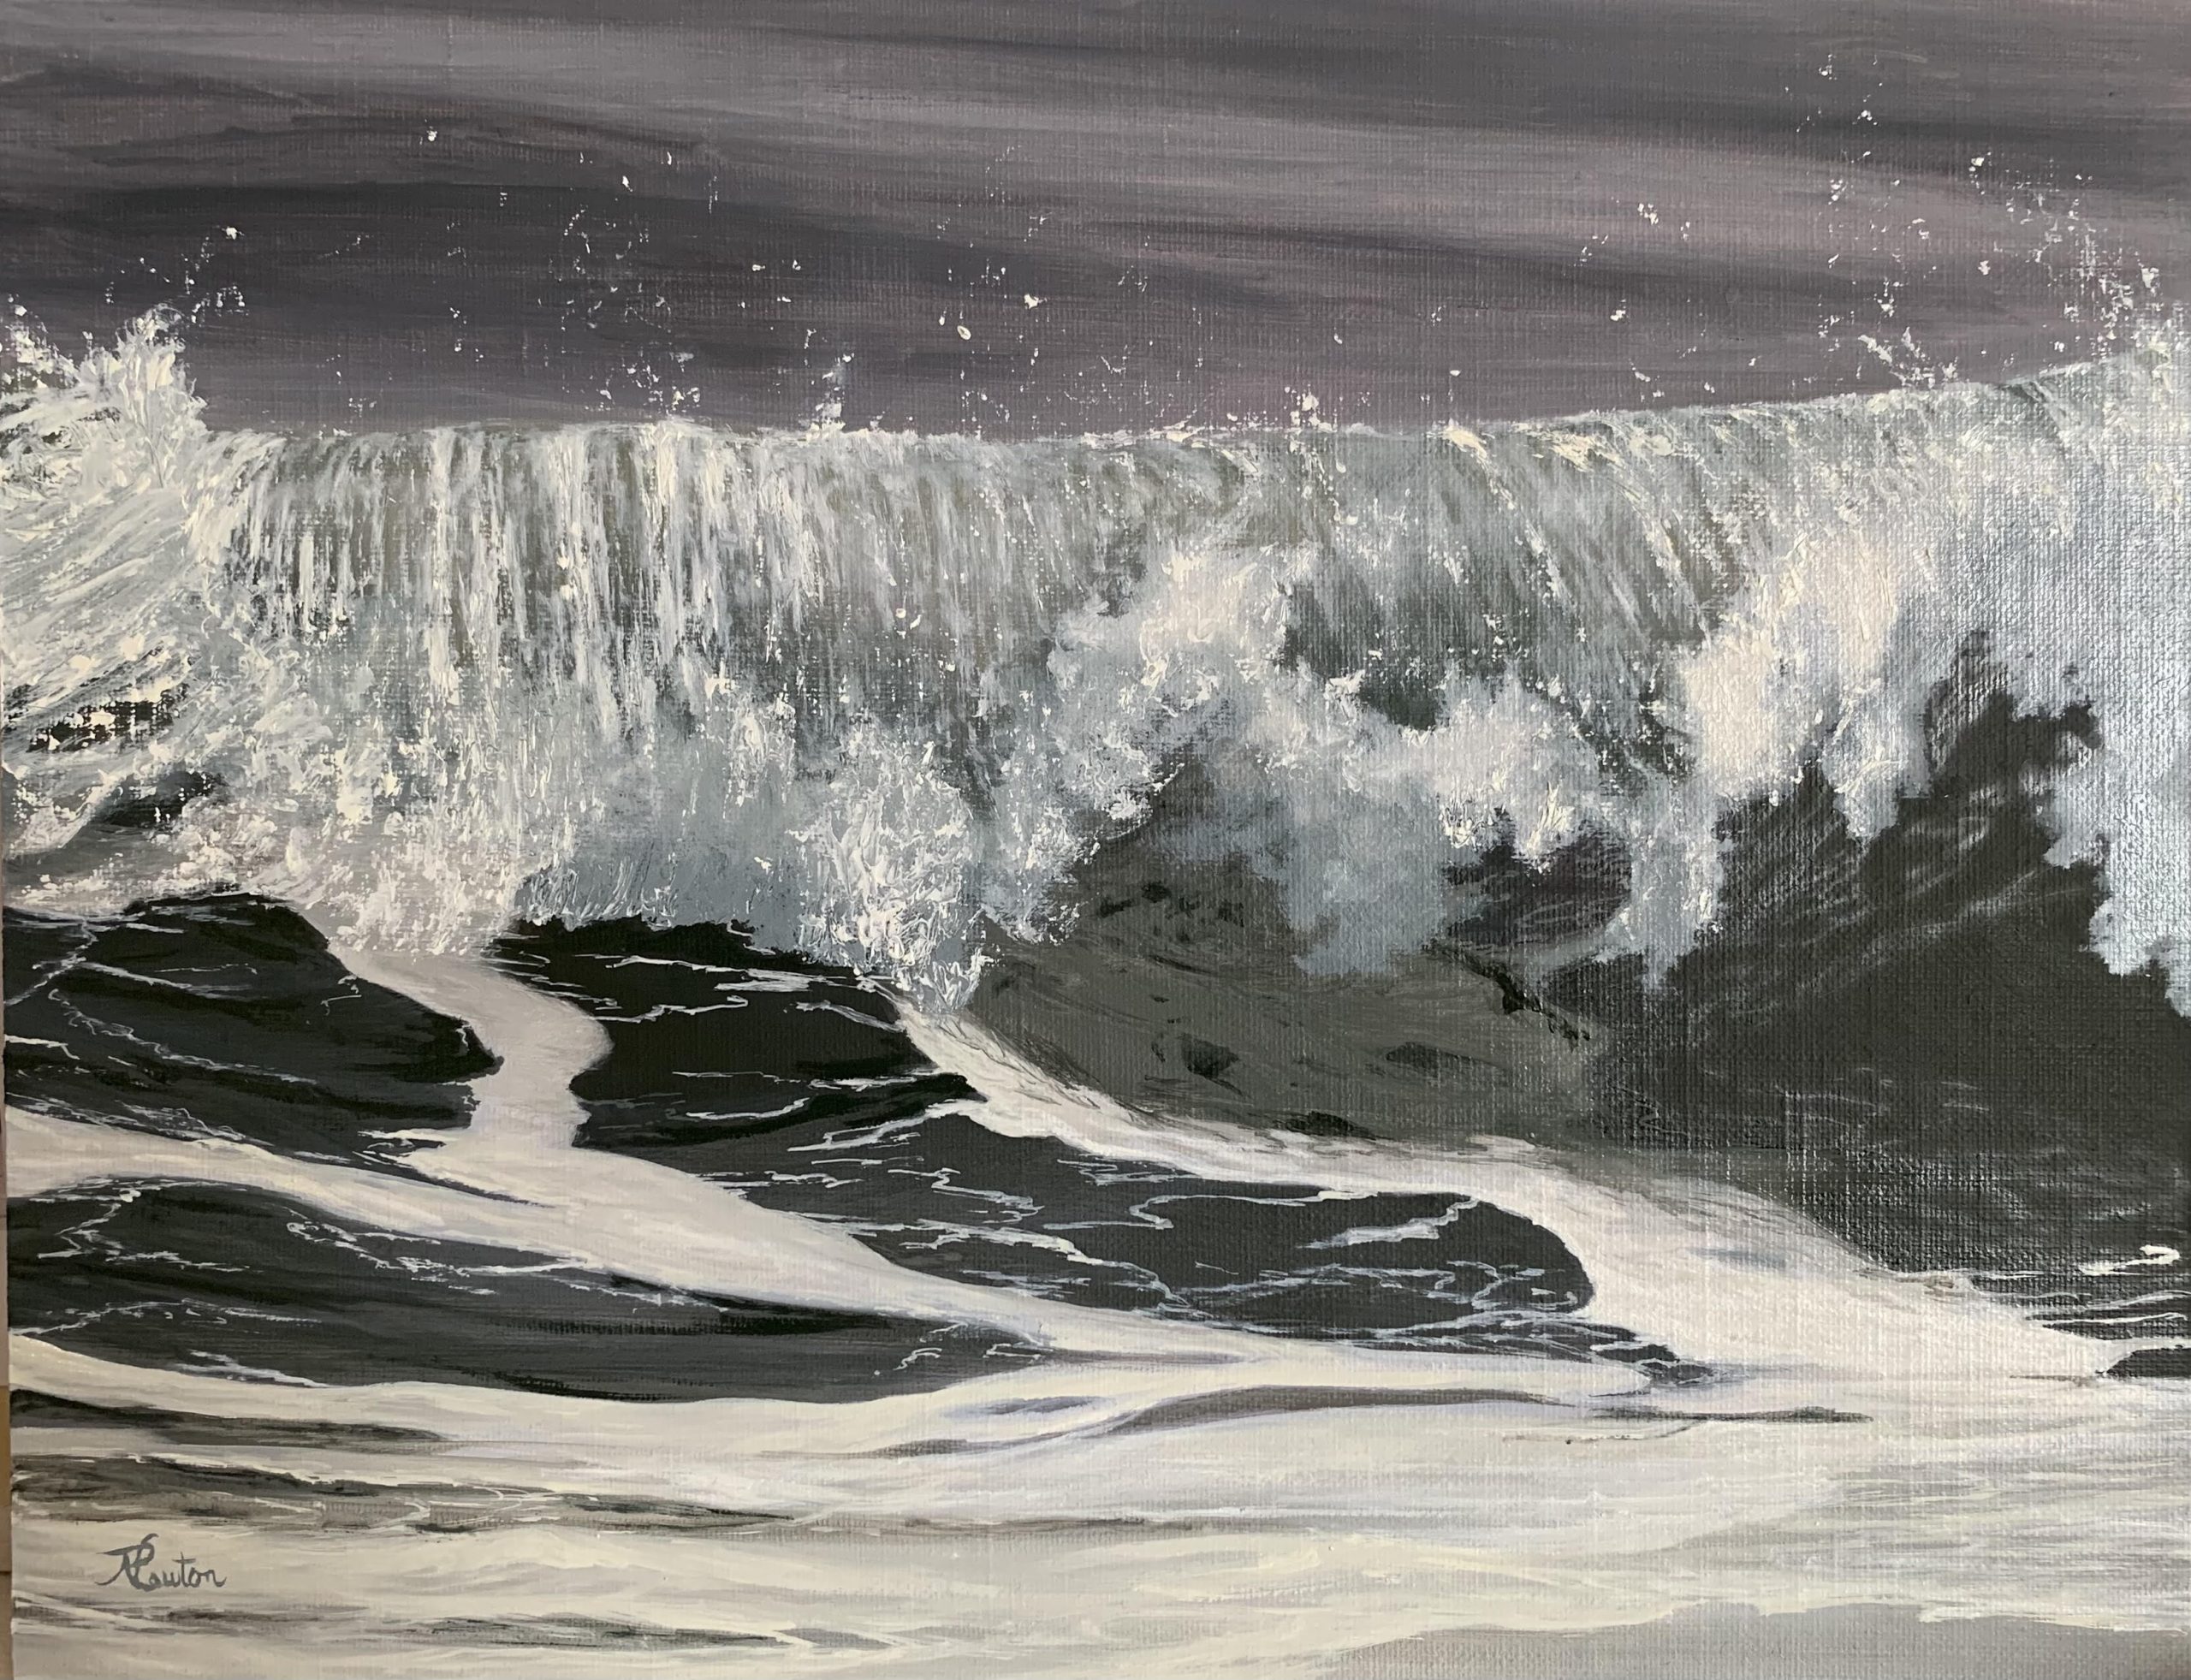 Ocean Scape #14 11x14, Oil on linen panel $700.